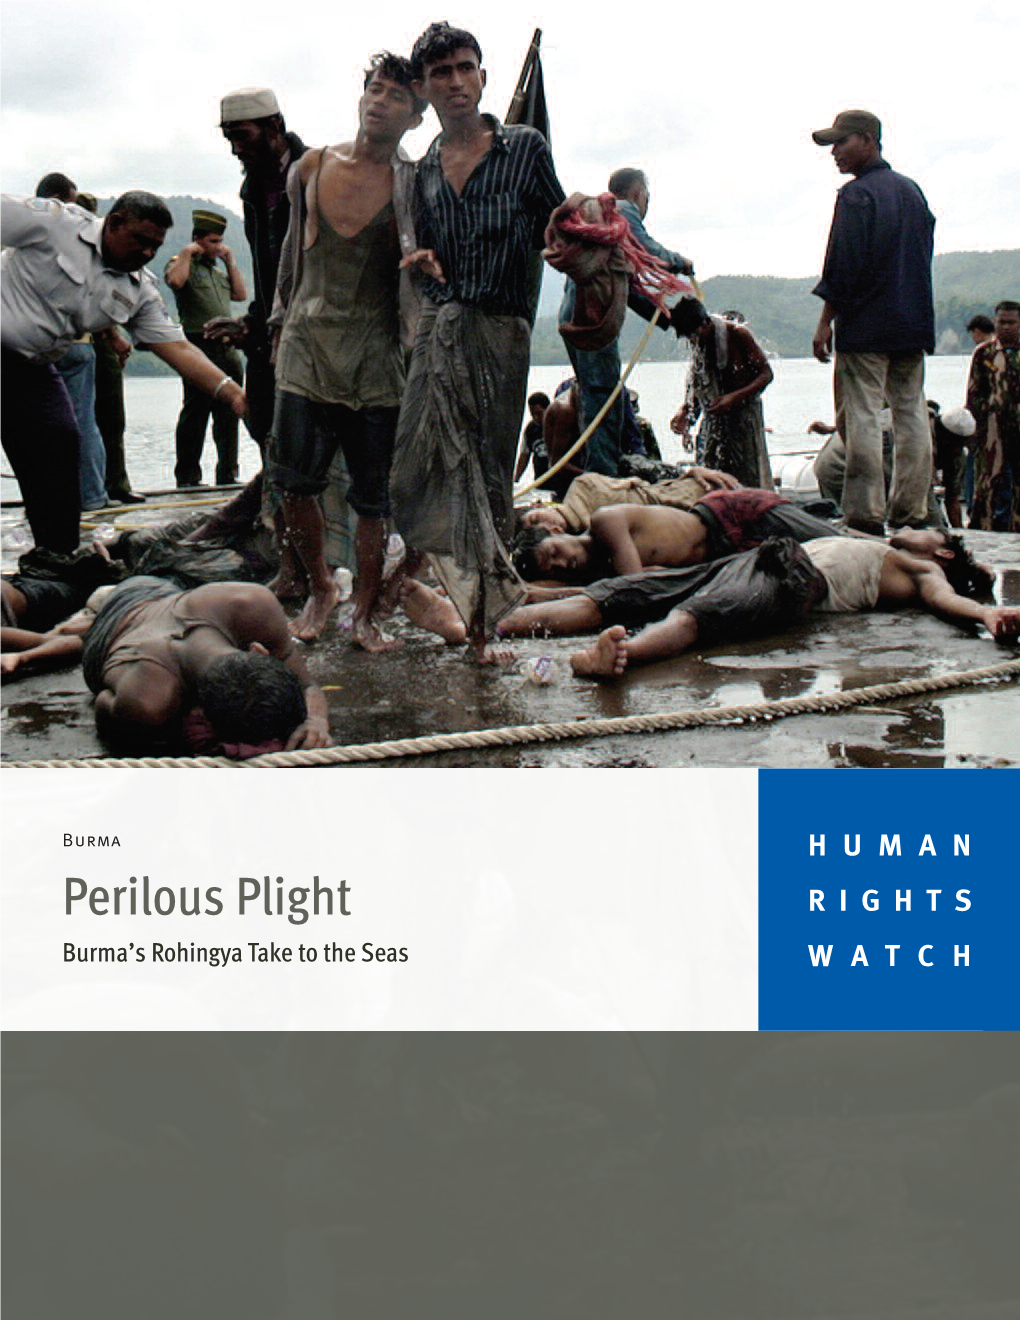 Perilous Plight: Burma's Rohingya Take to the Seas